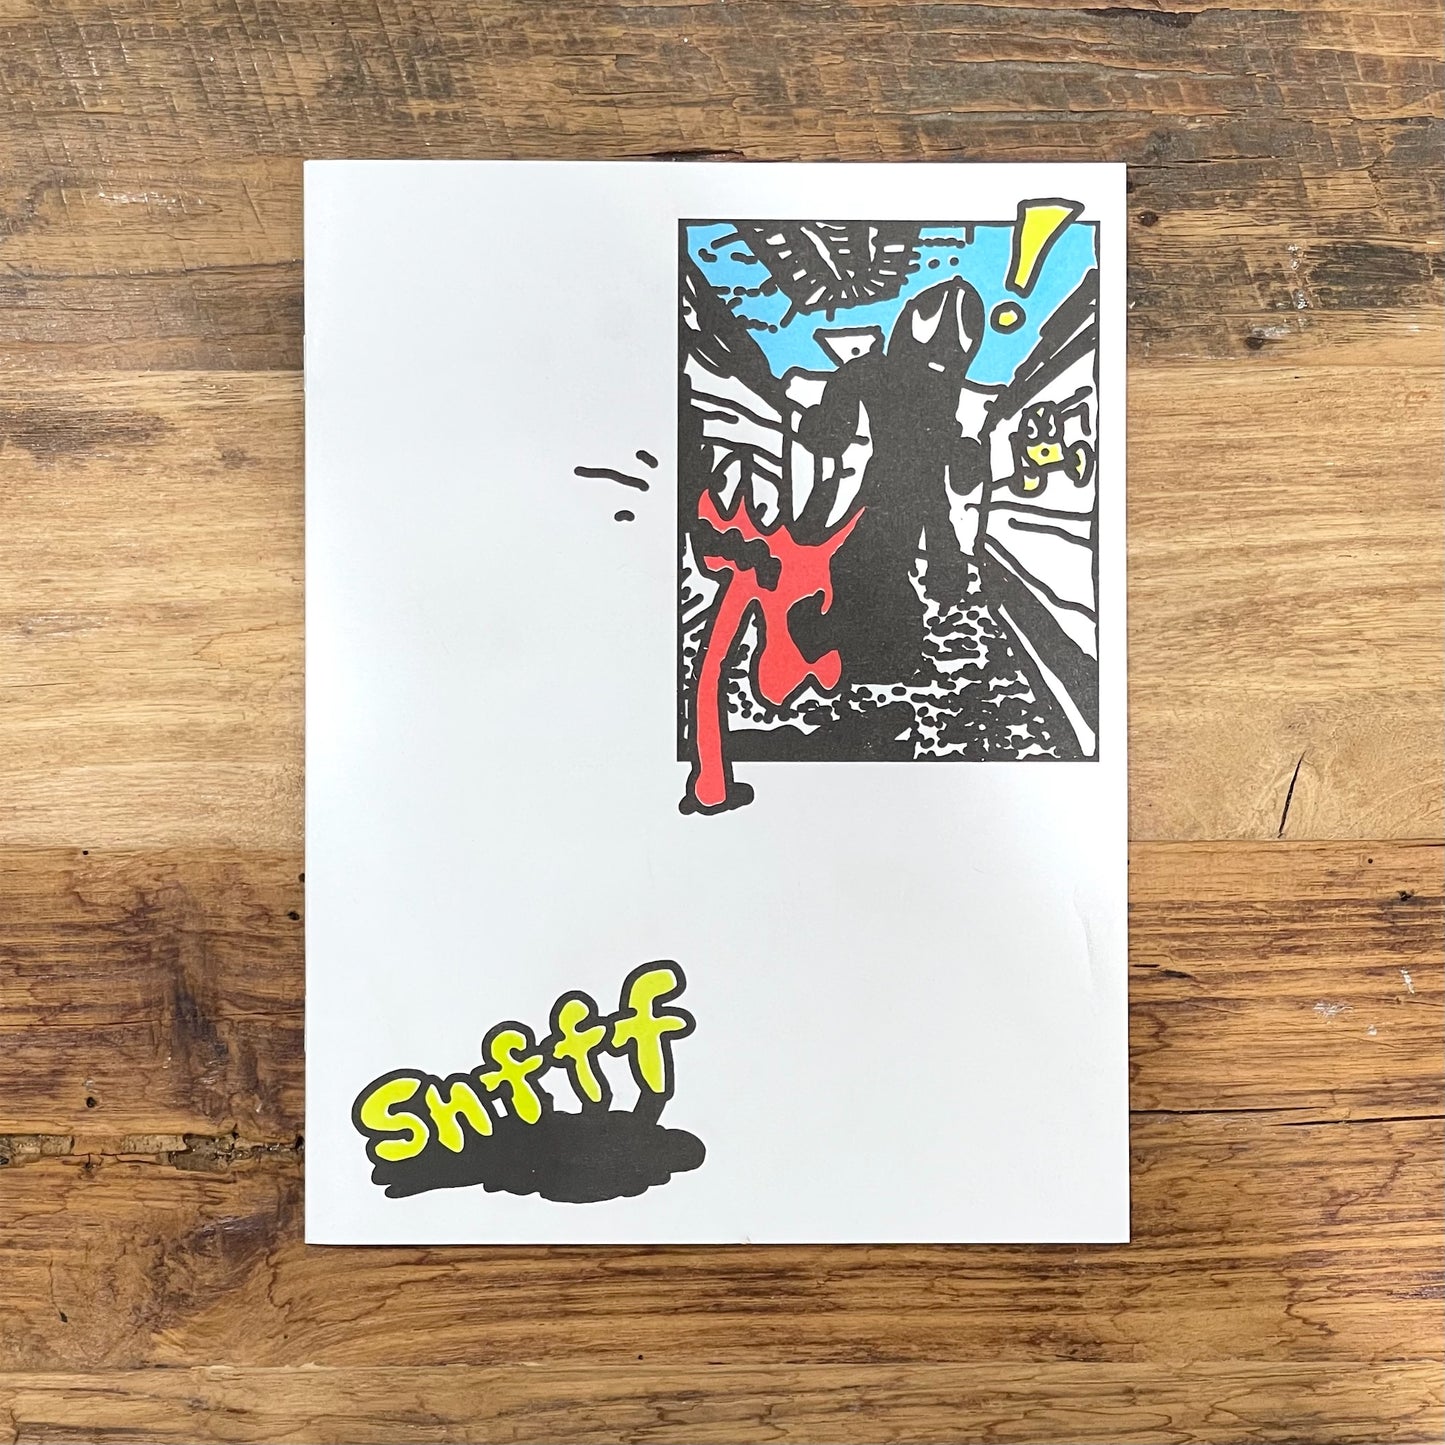 SNFFF / Kurt Woerpel / TXT books